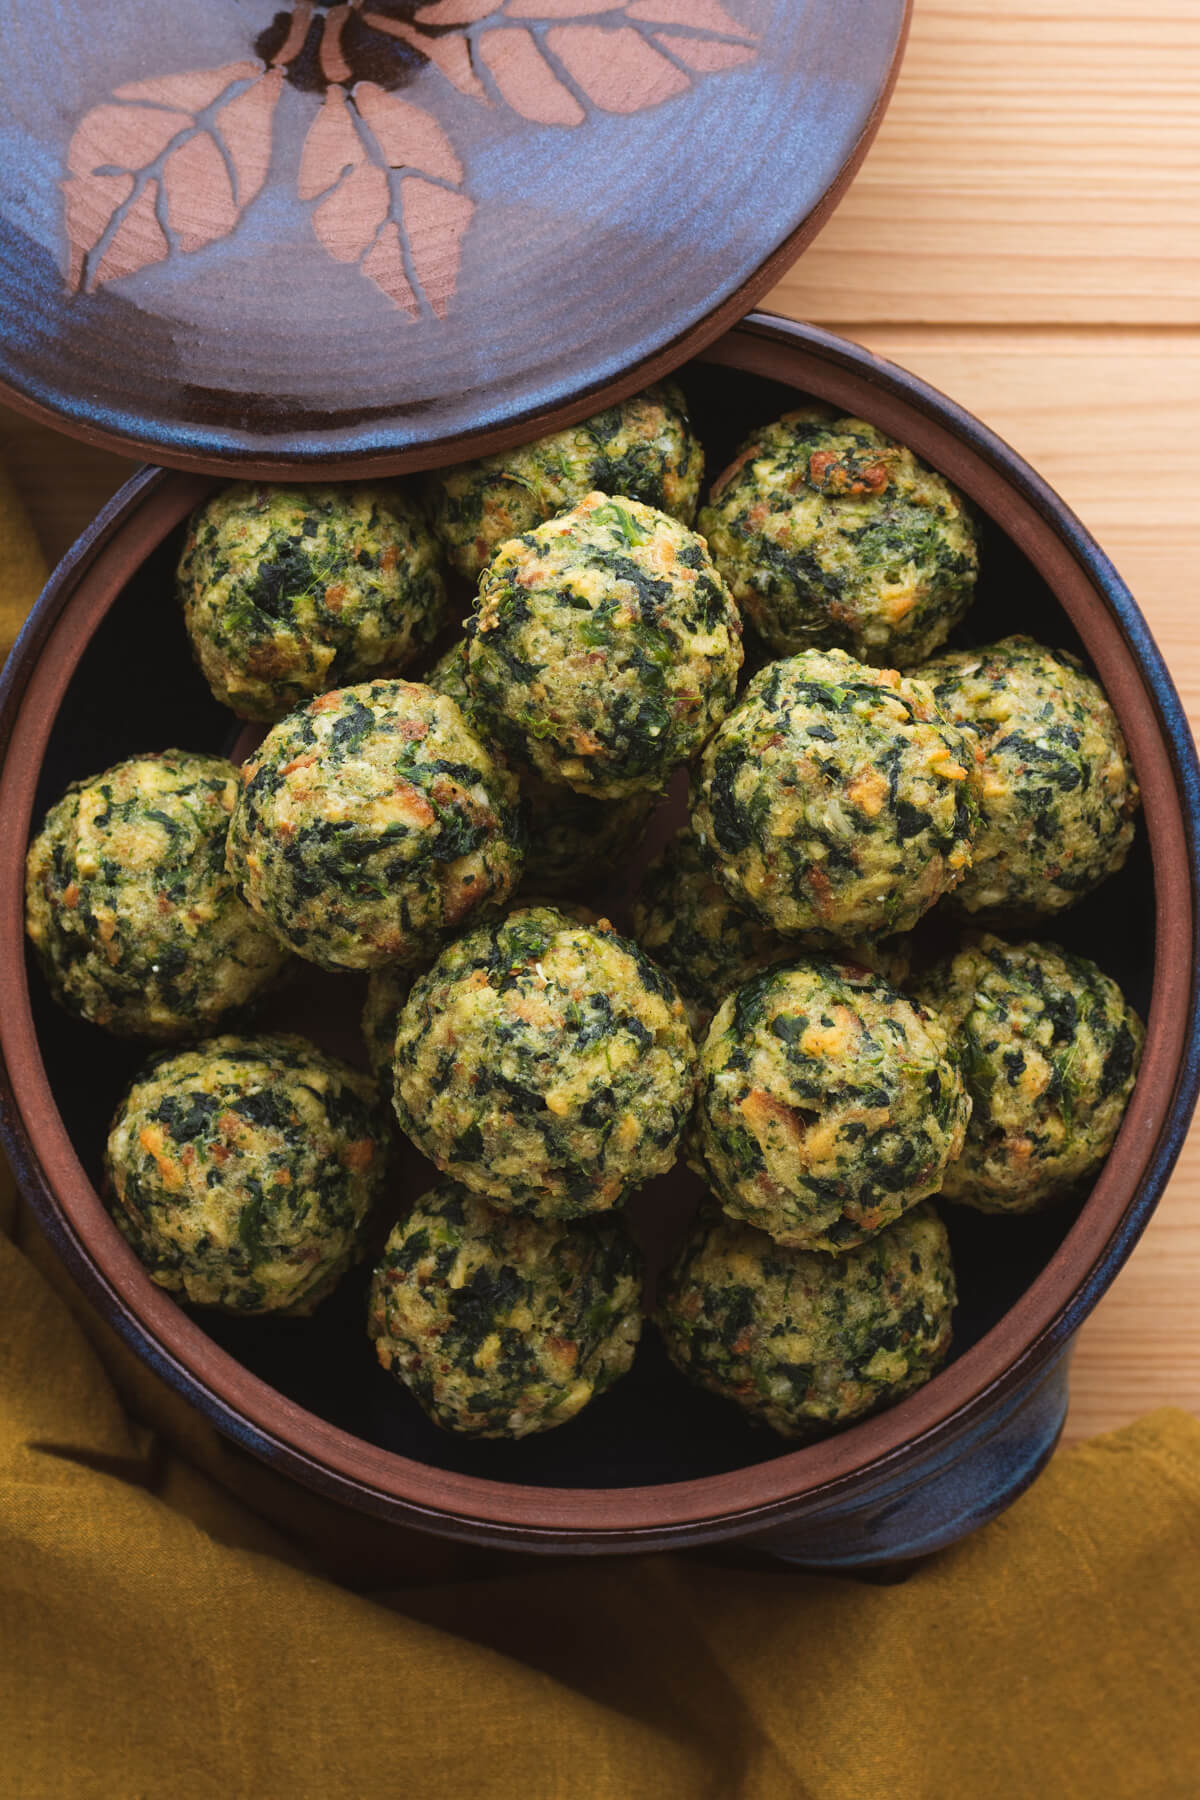 Spinach Stuffing Balls in a ceramic casserole dish.